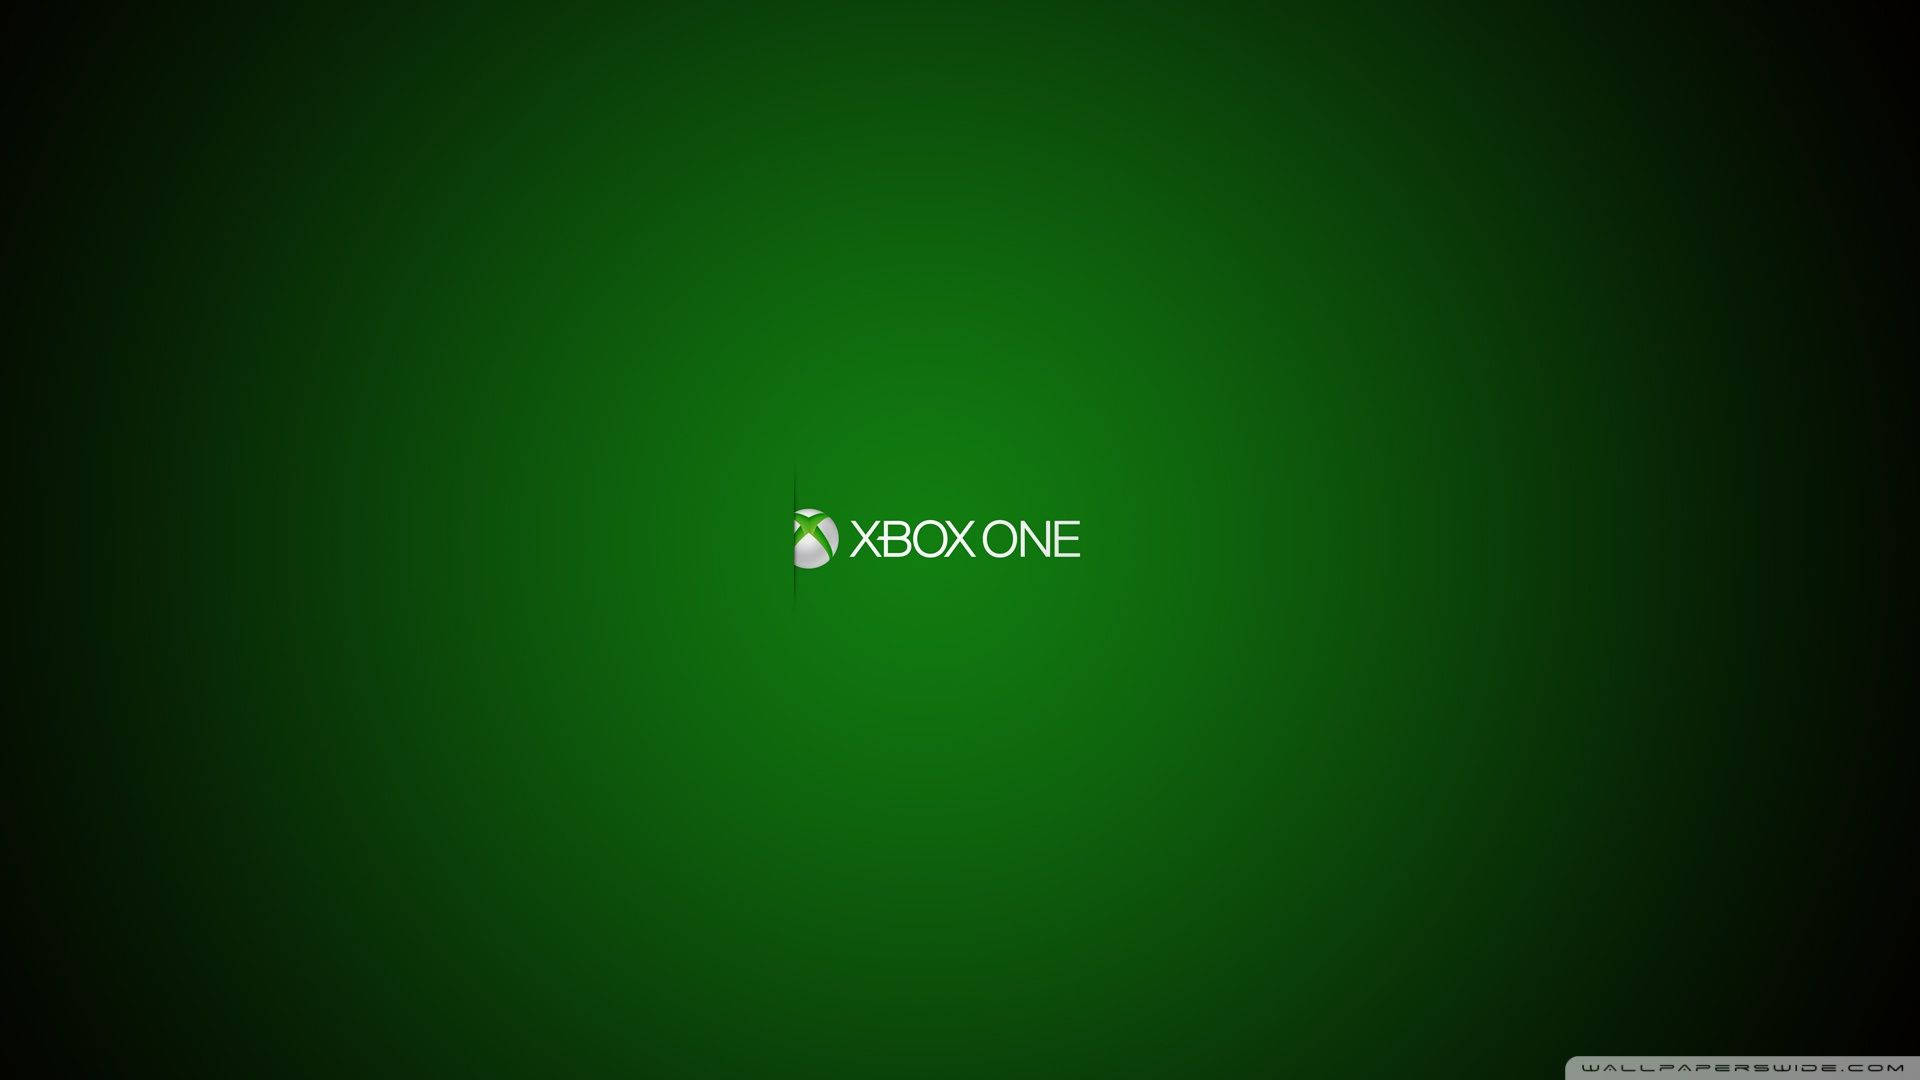 Xboxone X Efeito De Vignette Verde. Papel de Parede